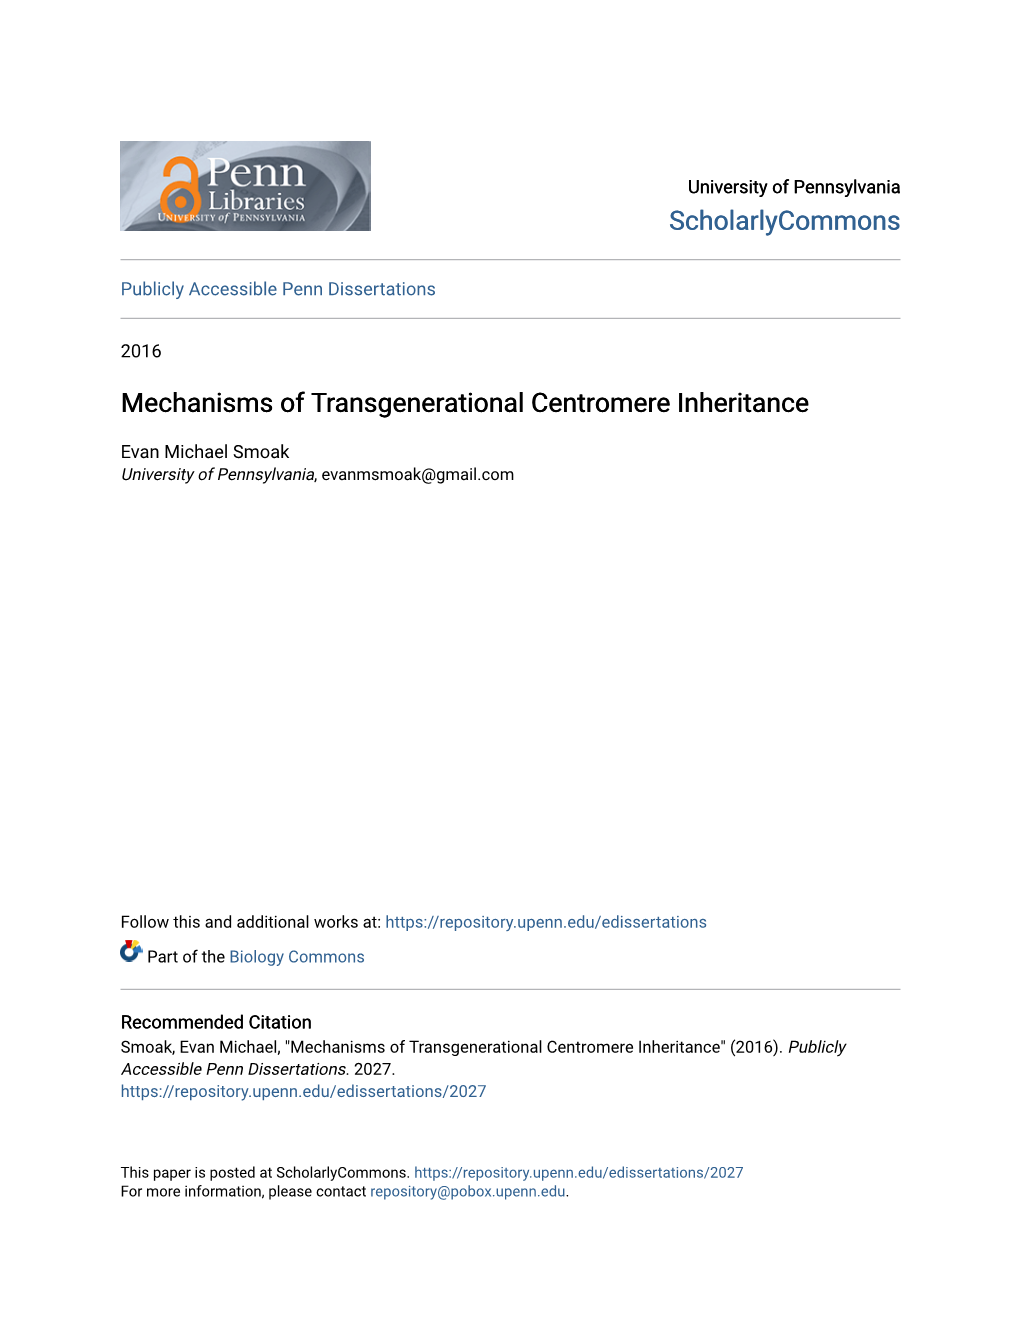 Mechanisms of Transgenerational Centromere Inheritance